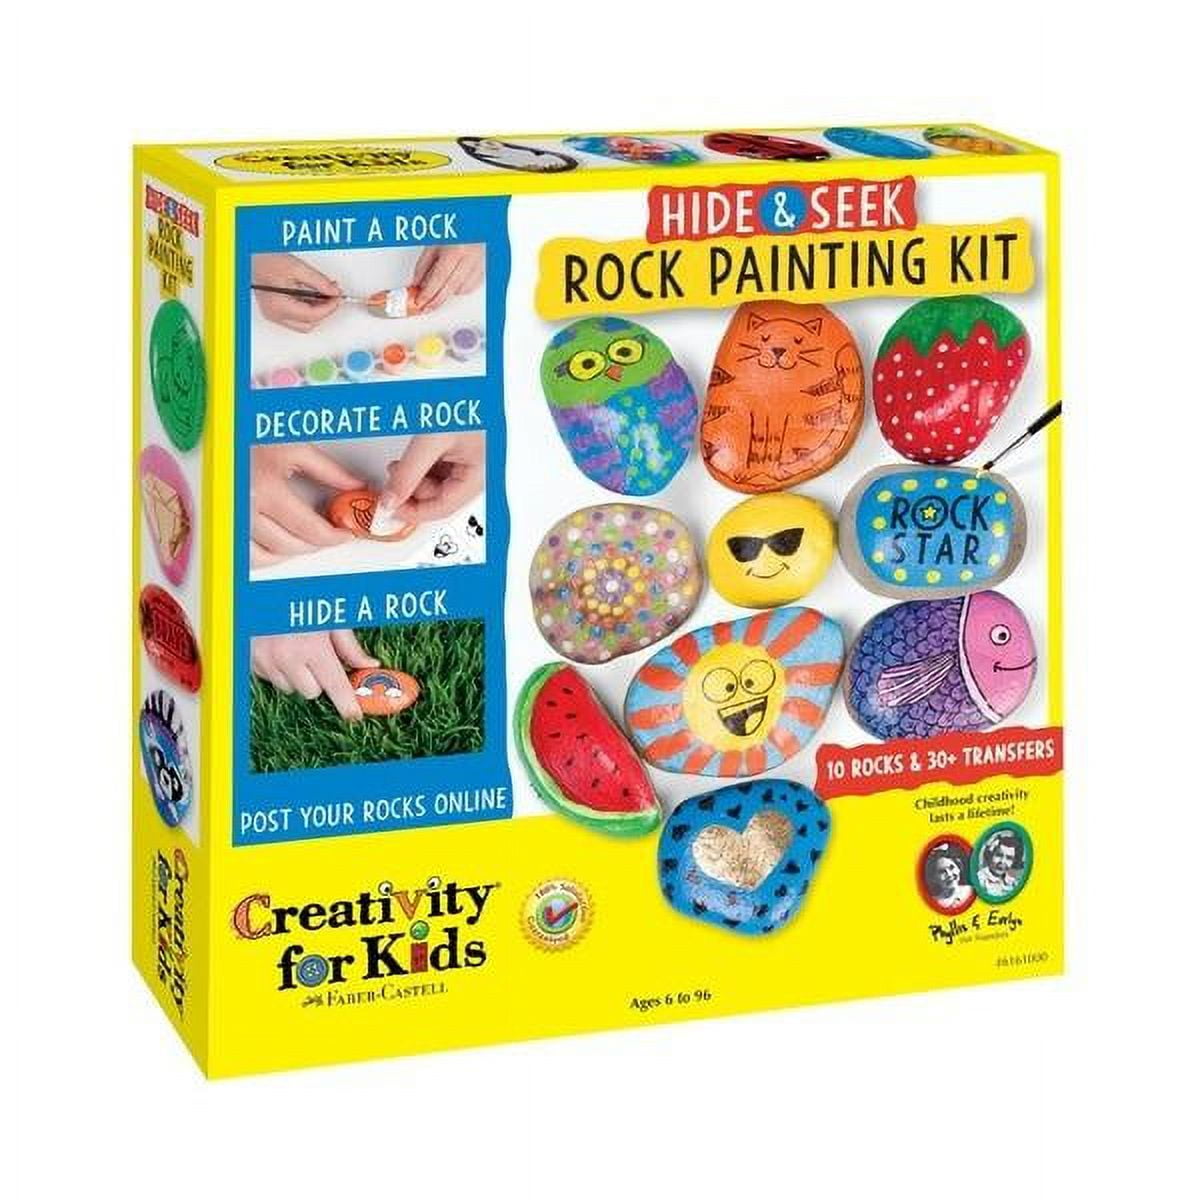 Mandala Dotting Tools Kit with Acrylic Paints and Reusable Stencils - Fun  Rock Painting & DIY Craft Project - Dot Art Supplies with Zipper Bag 